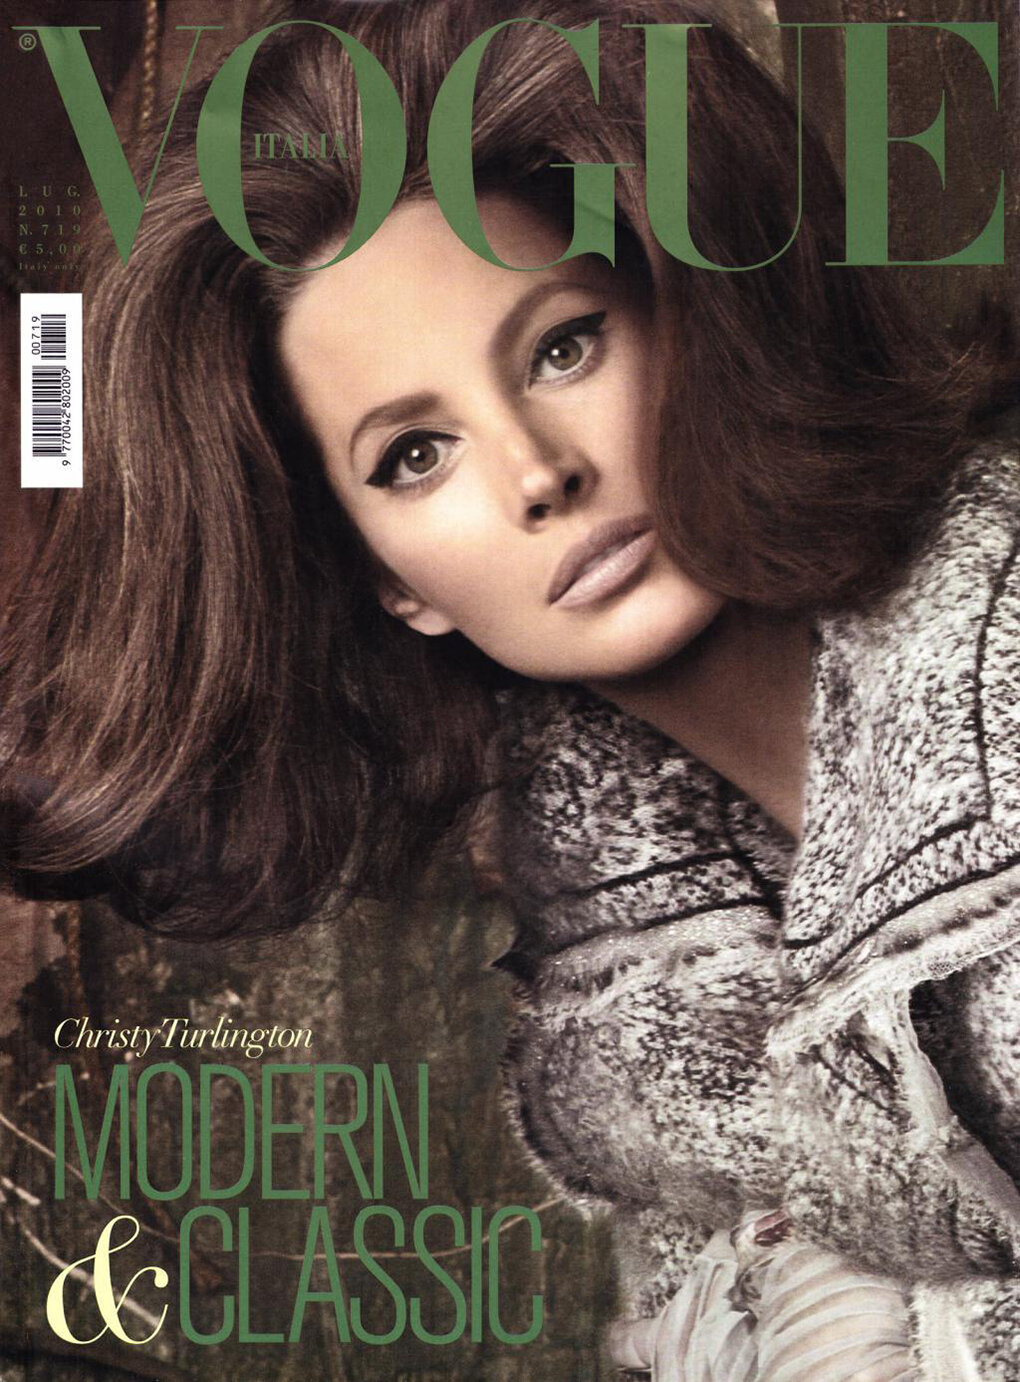 Christy-Turlington-Steven-Meisel-Vogue-Italia-July-2010-1.jpg